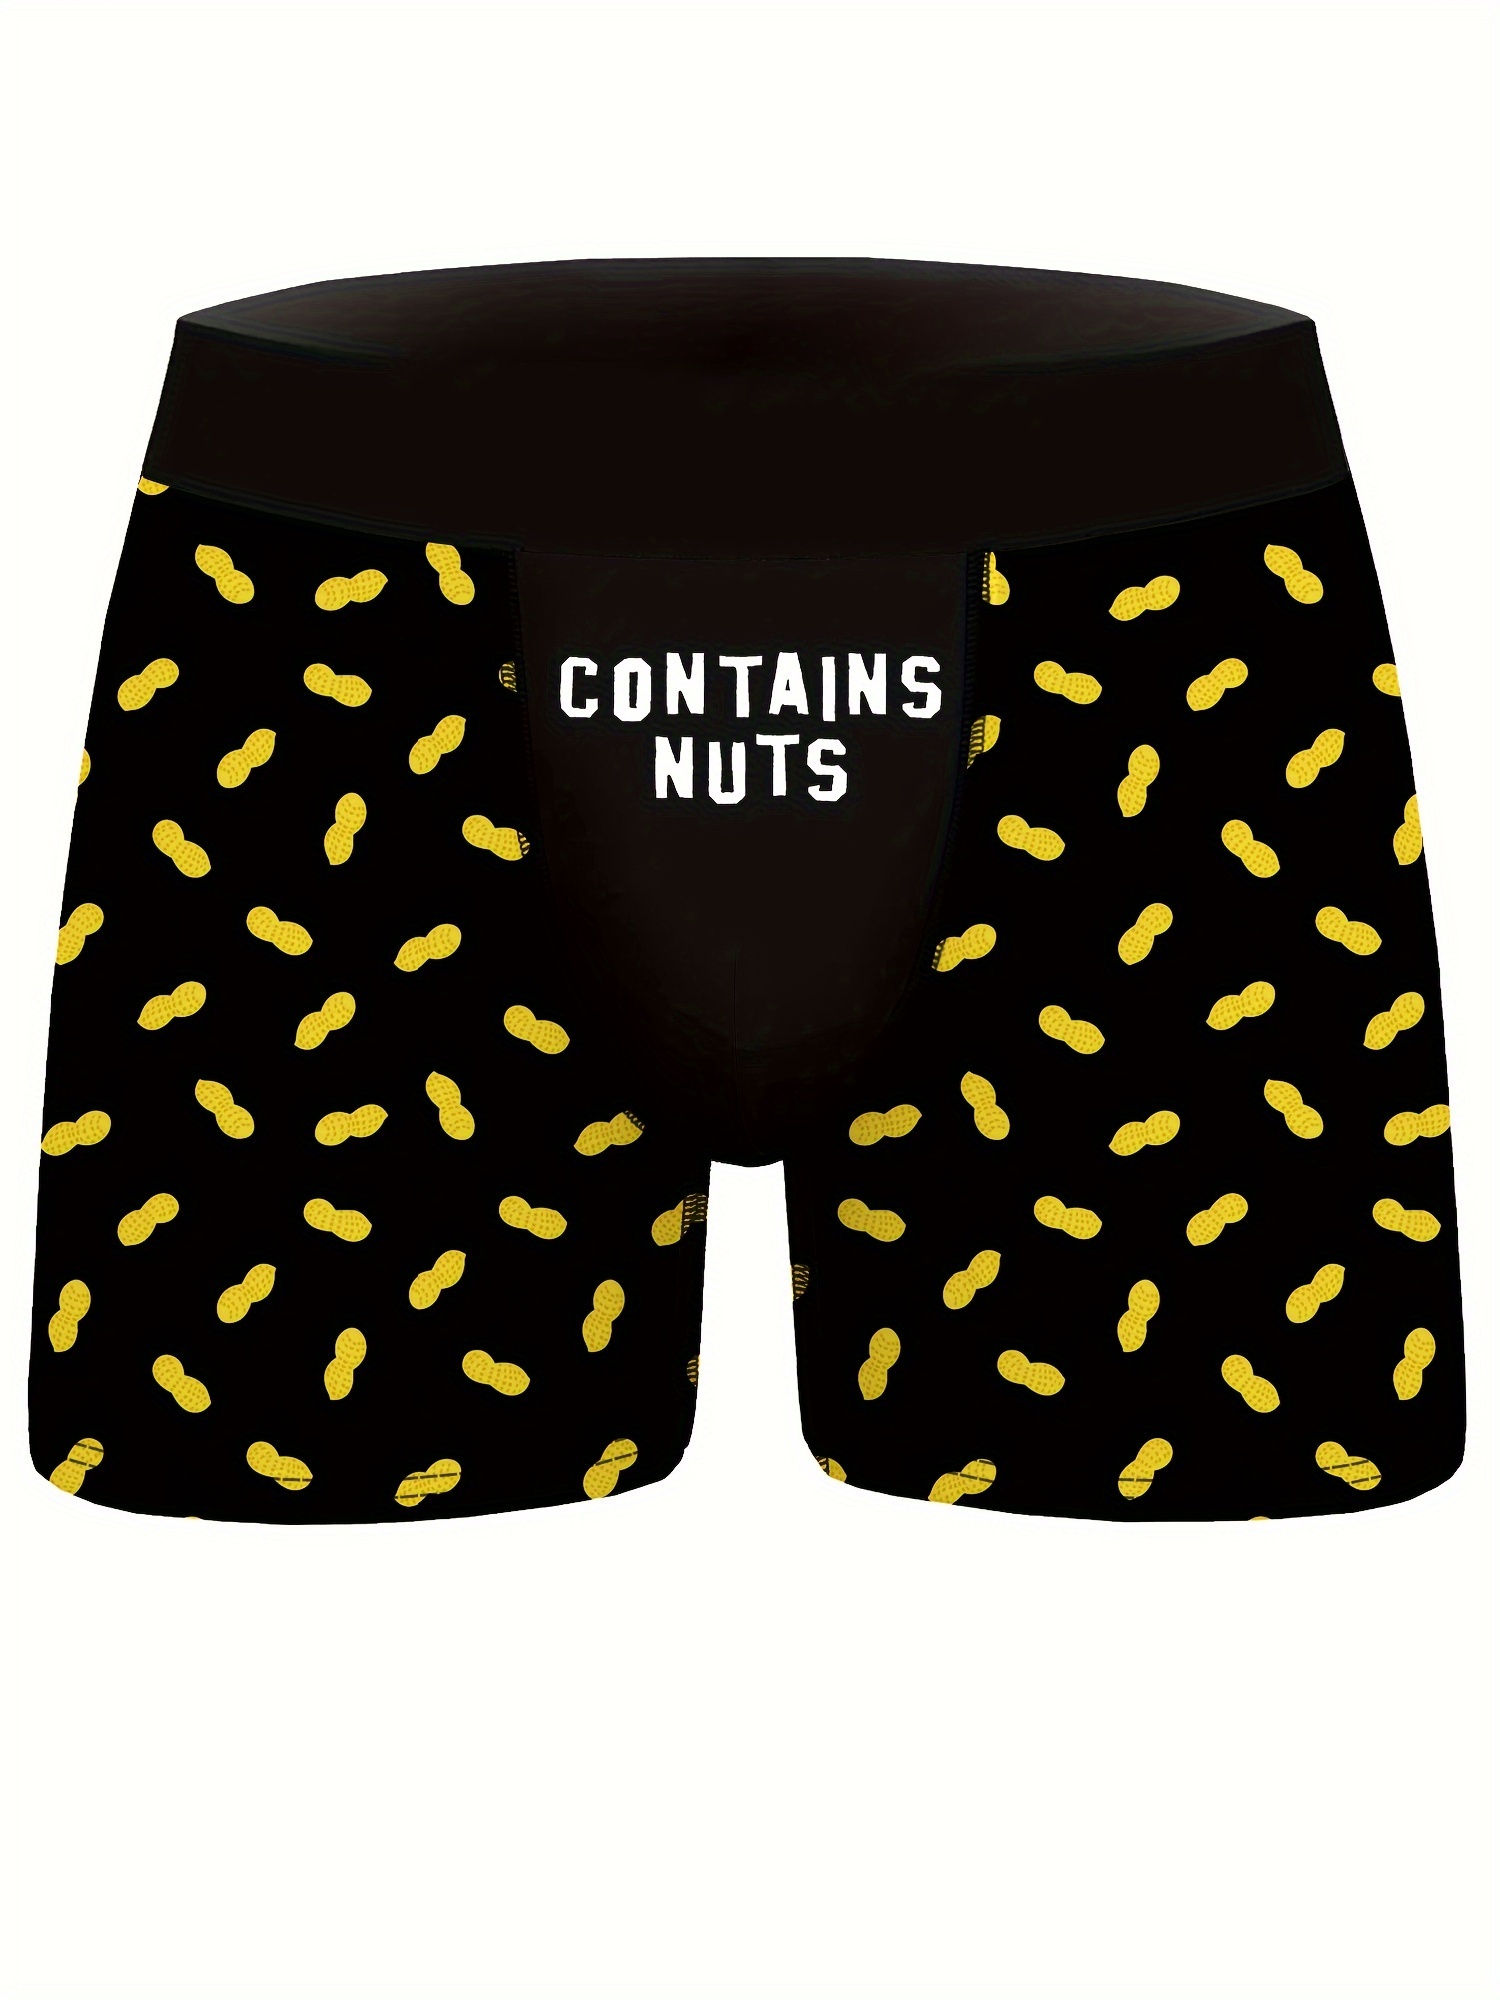 Men's Choking Hazard Warning Print Fashion Novelty Boxer Briefs Shorts,  Breathable Comfy High Stretch Boxer Trunks, Men's Underwear